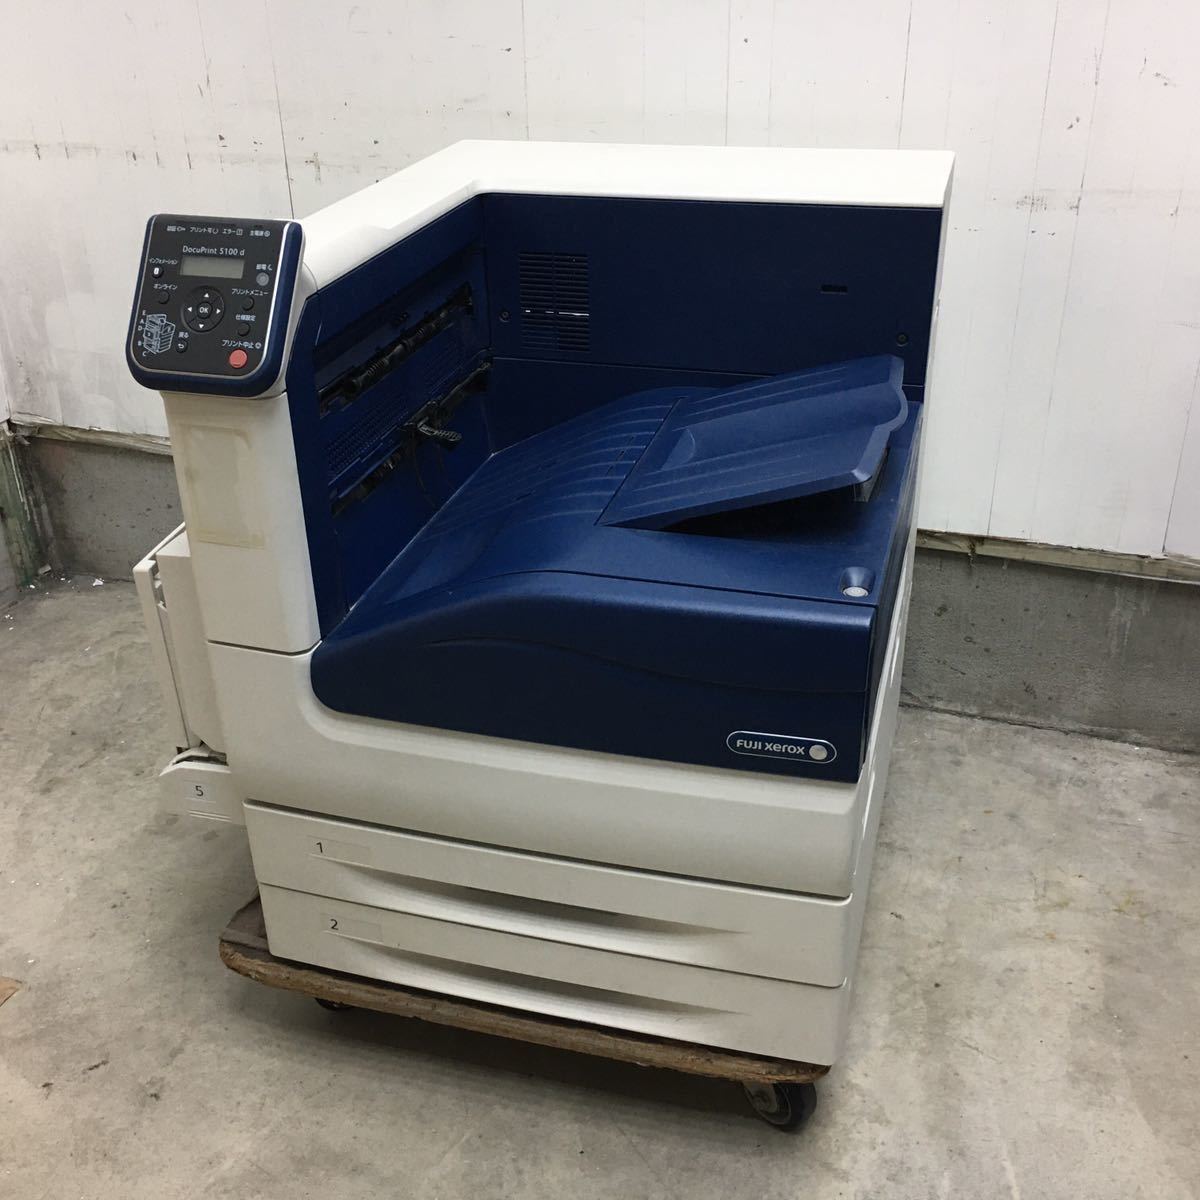 FUJI Xerox 富士ゼロックス A3 モノクロ プリンター DocuPrint 5100d 2段カセット 動作確認済 自社便配送限定 埼玉県 八潮市から